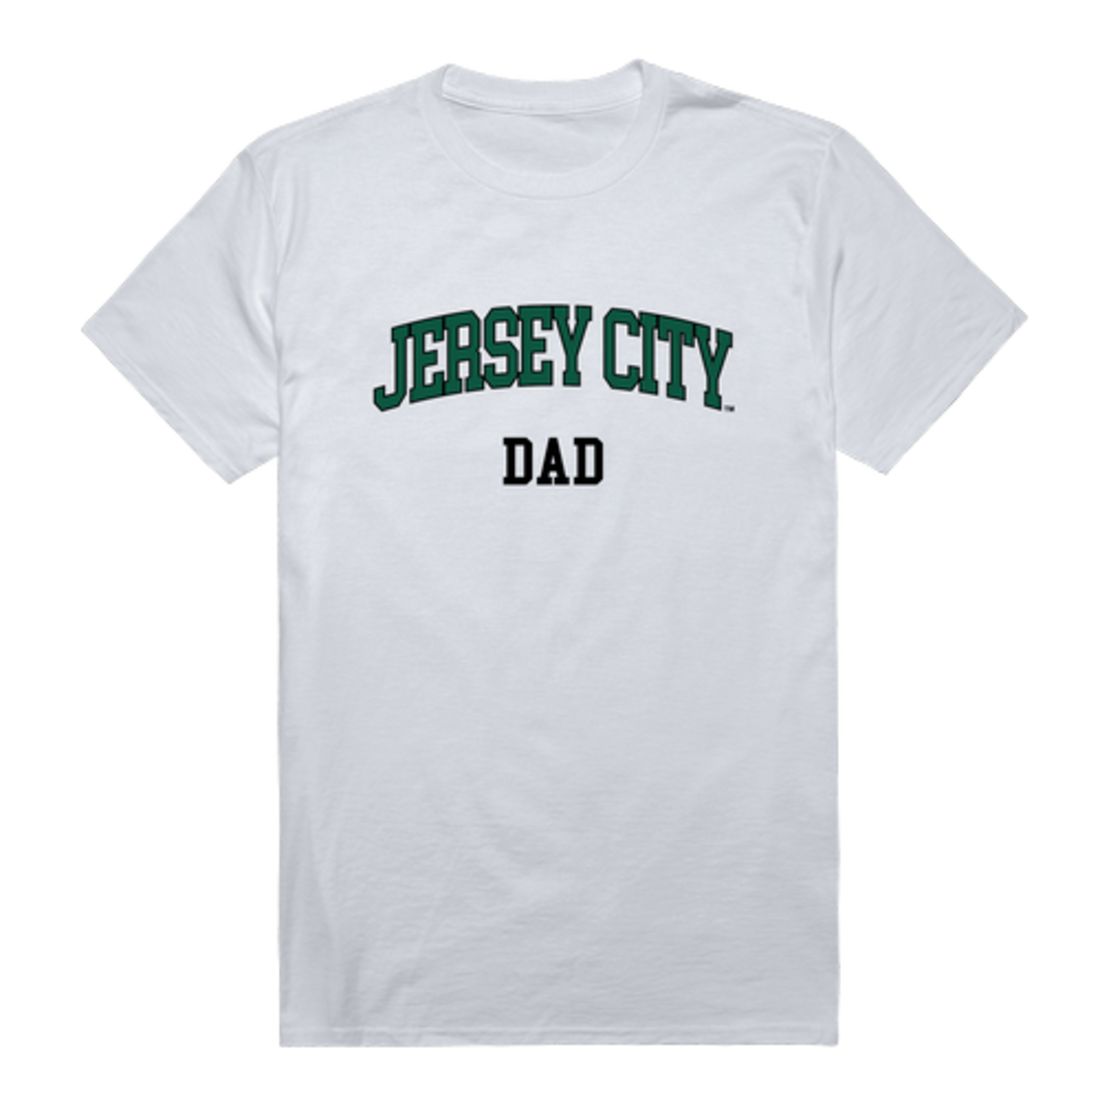 New Jersey City University Knights Dad T-Shirt